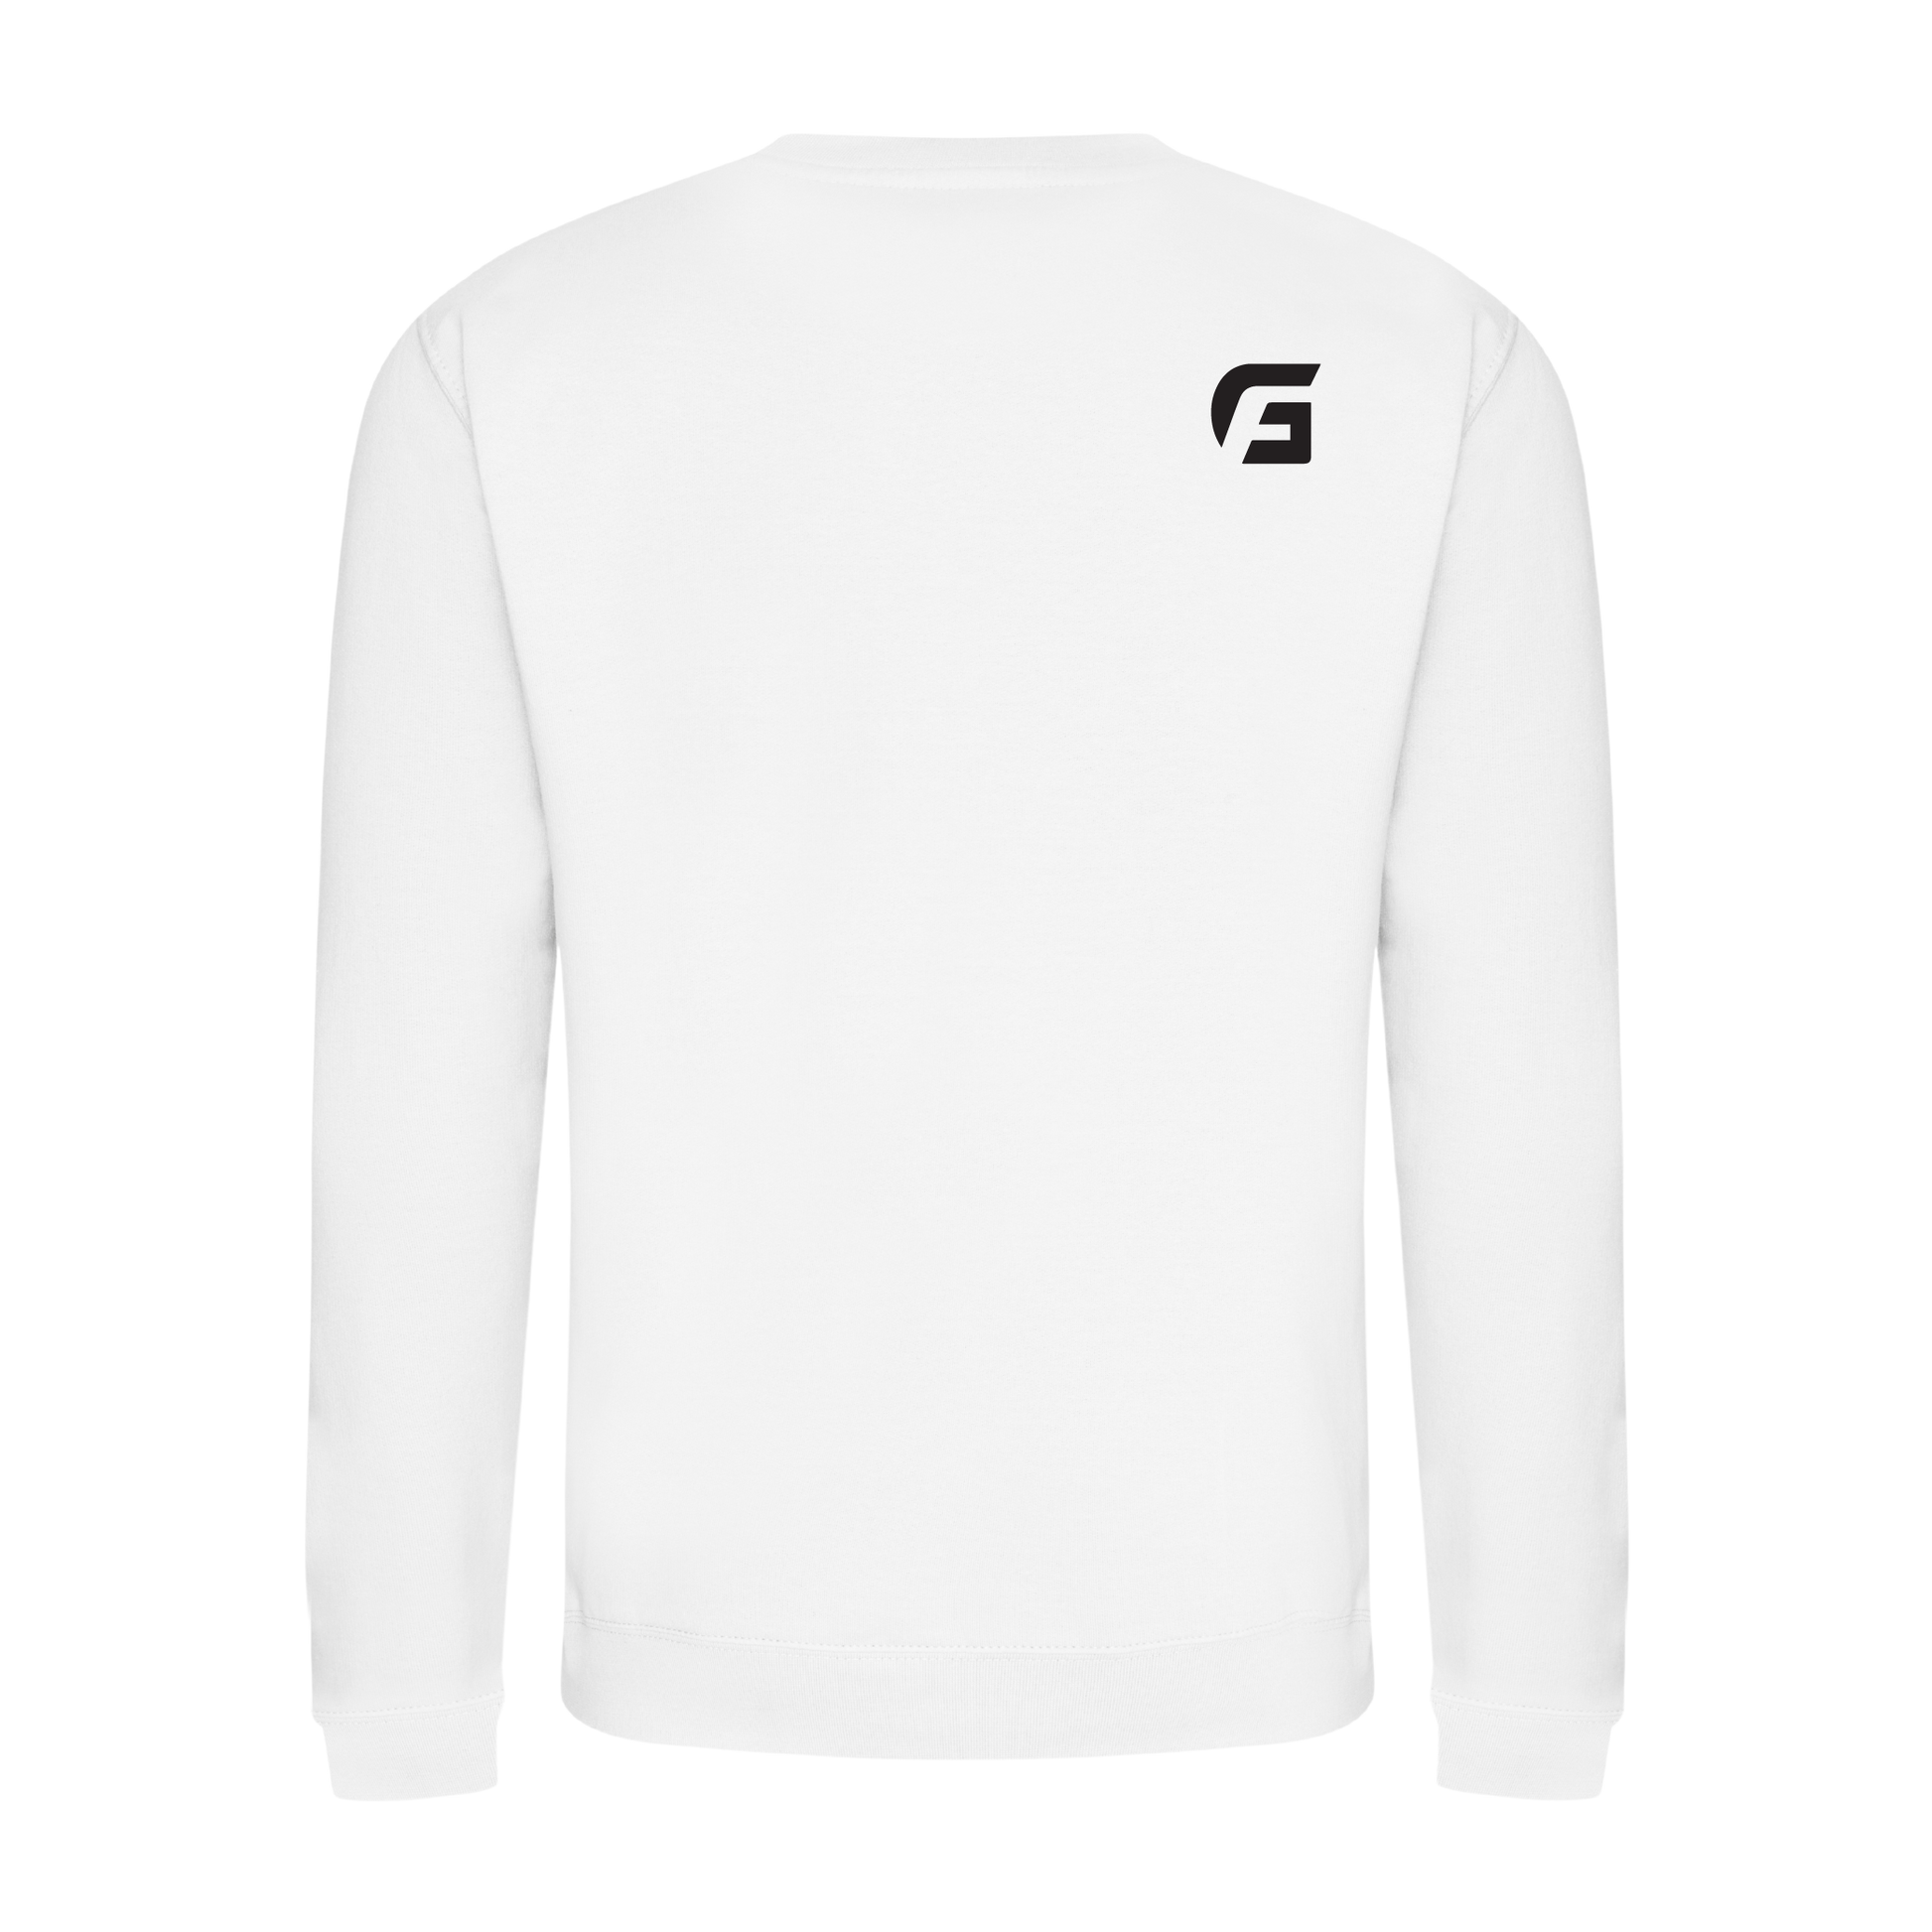 Focusgolf Approach Men's Arctic White Sweatshirt